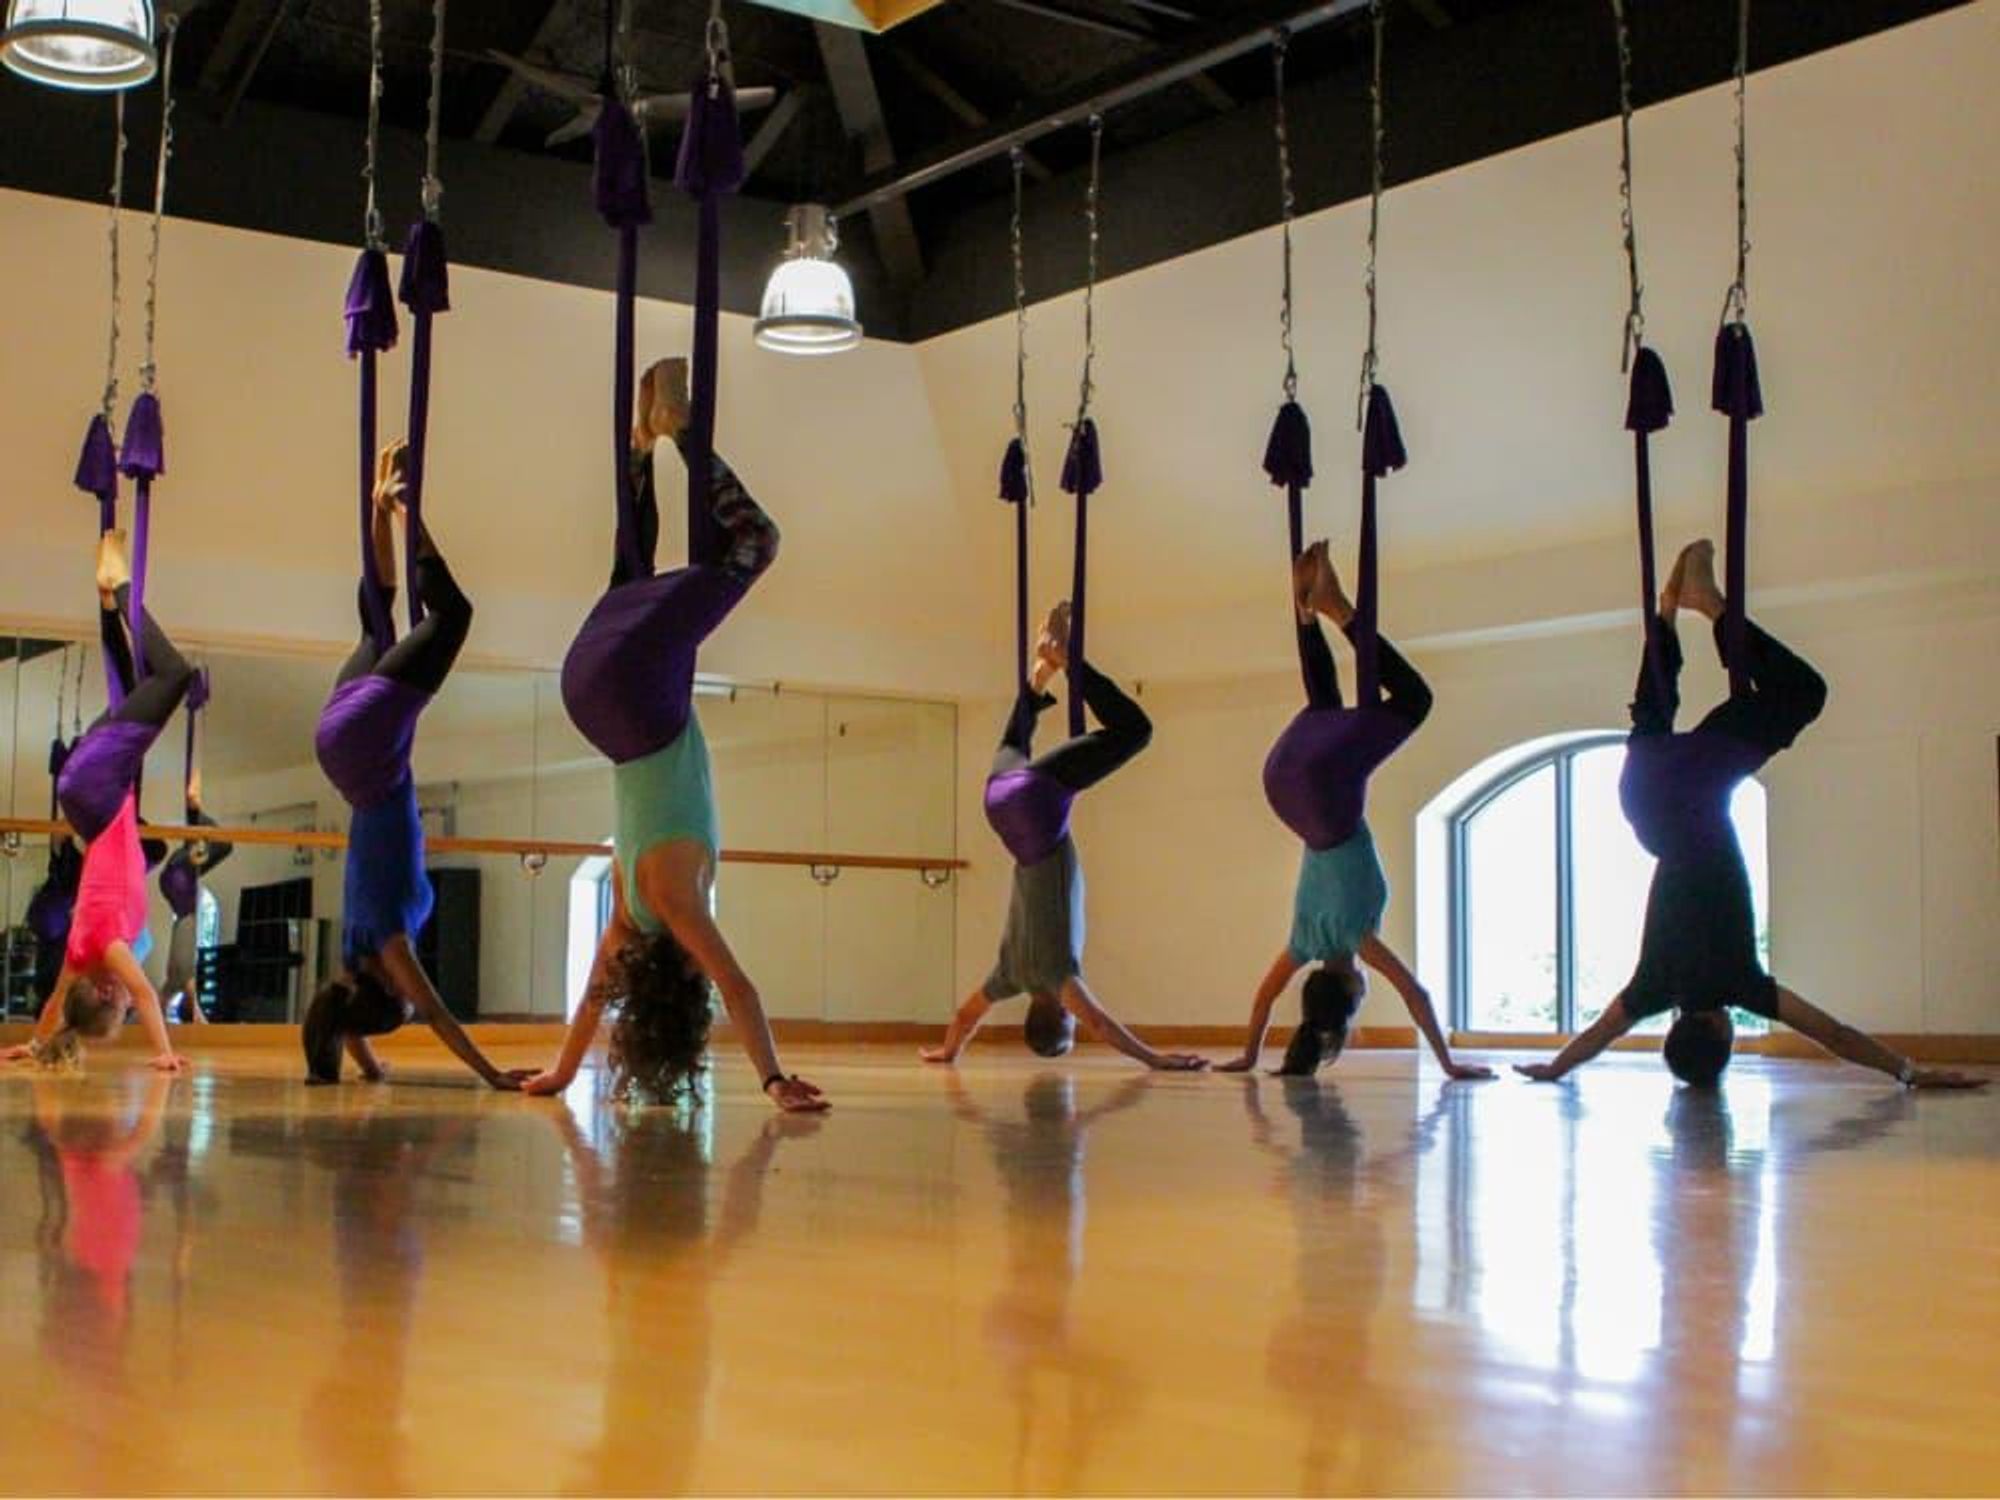 Strength Training Poses - omni-gym A yoga swing! I need one of